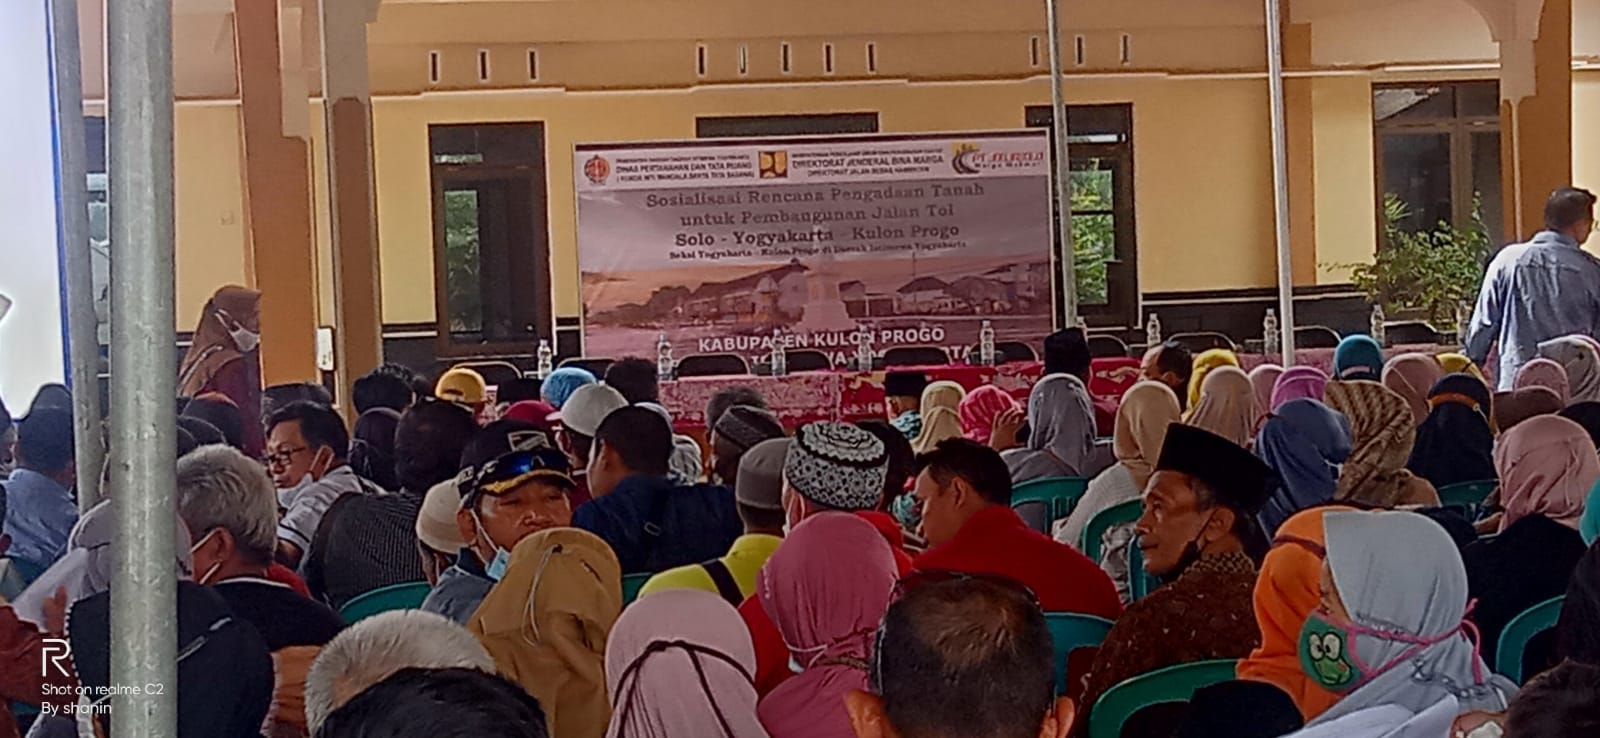 Sosialisasi Rencana Pengadaan Tanah untuk Pembangunan Jalan Tol Solo-Yogyakarta-Kulon Progo